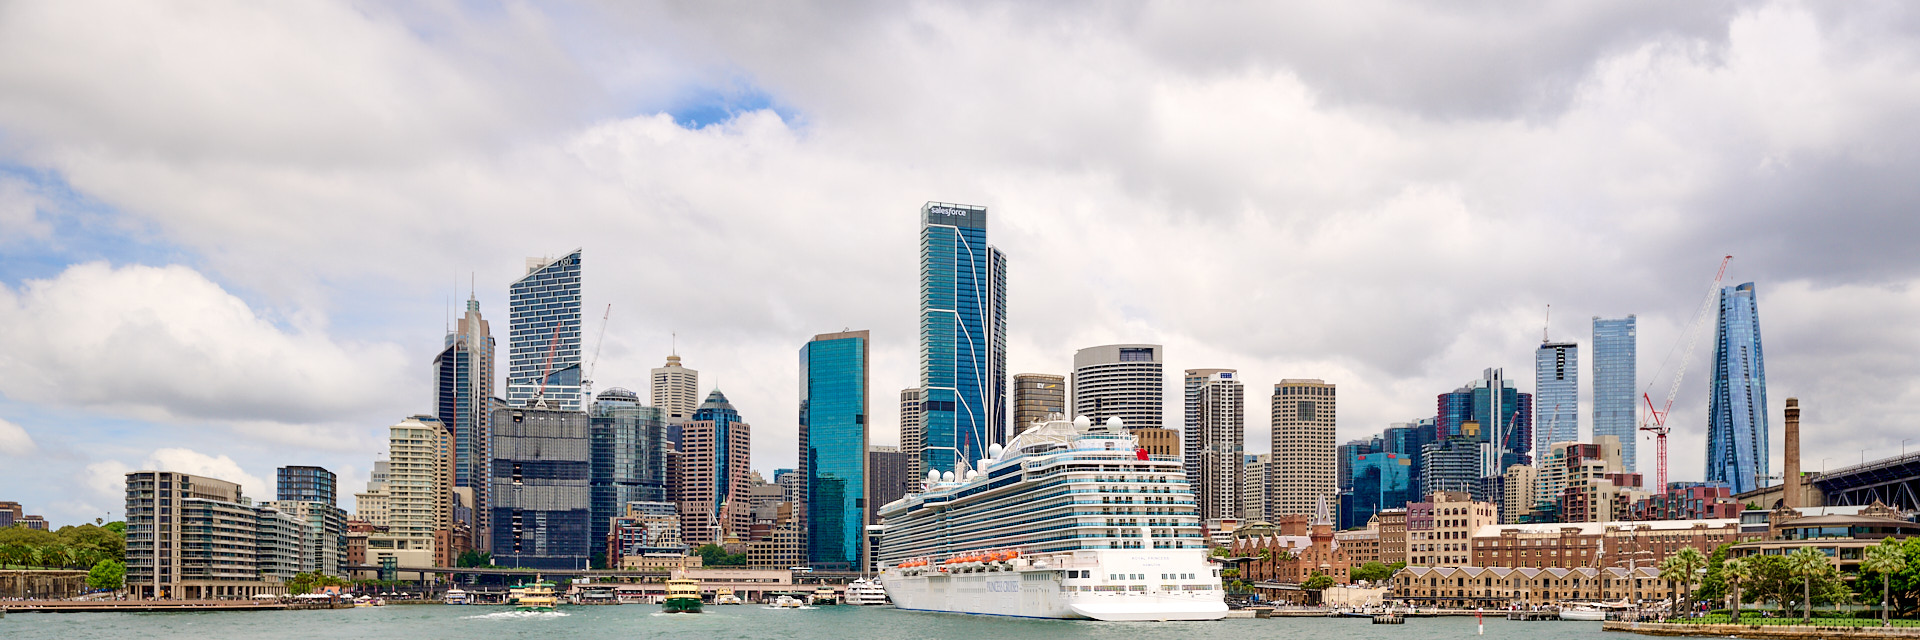 Sydney-CBD-City-Skyline-Harbour-Photo by orlandosydney.com